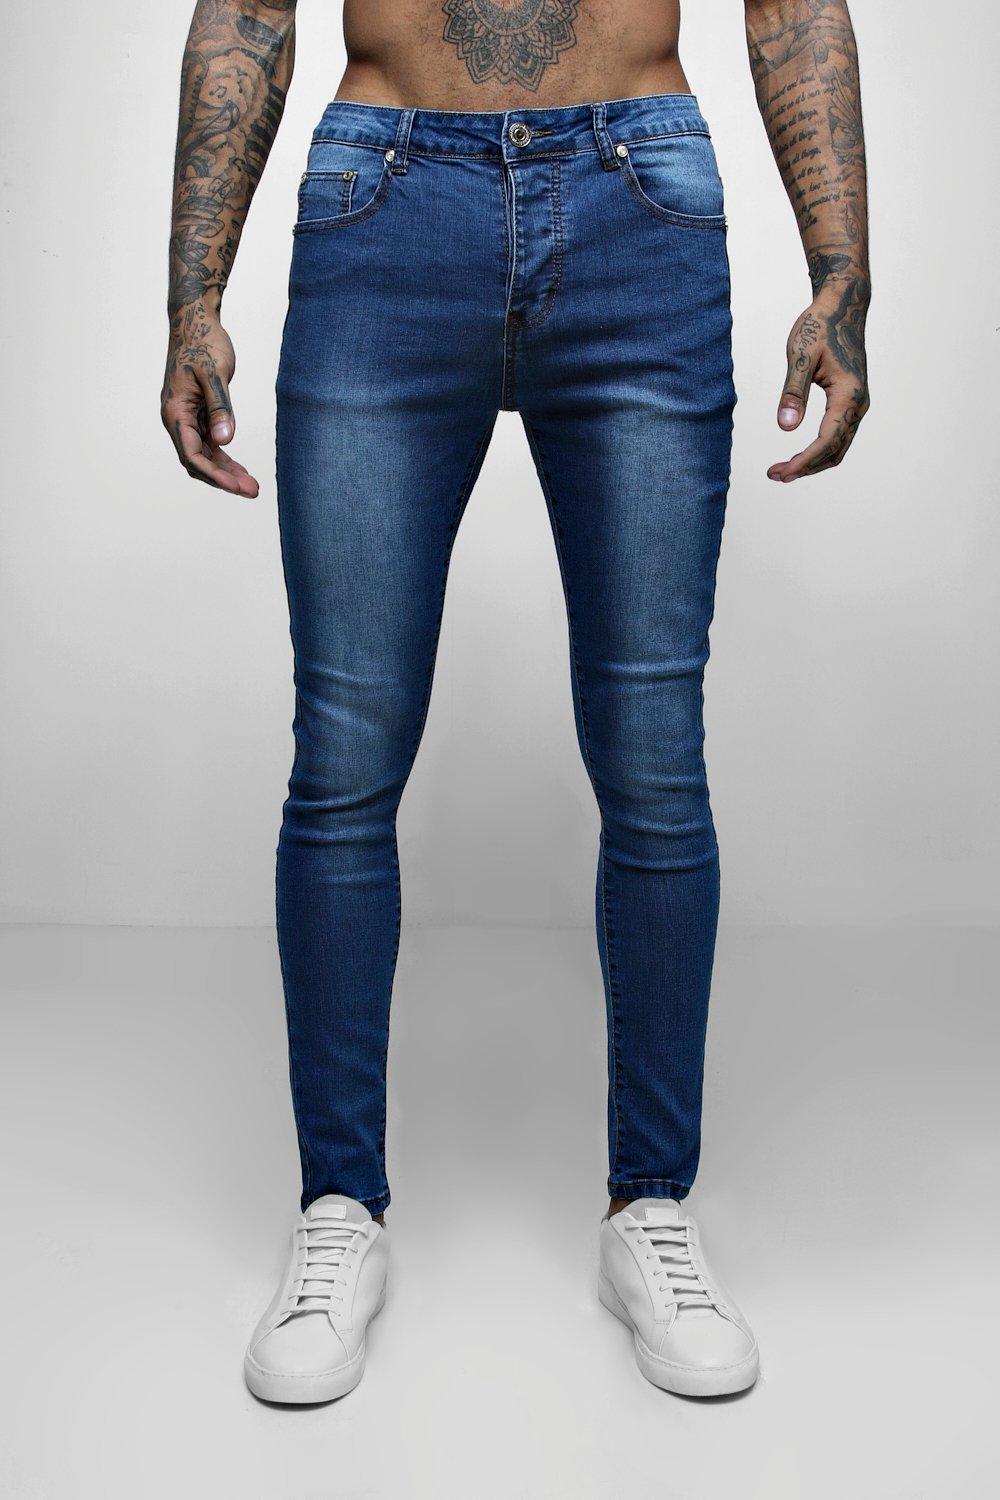 blue wash skinny jeans